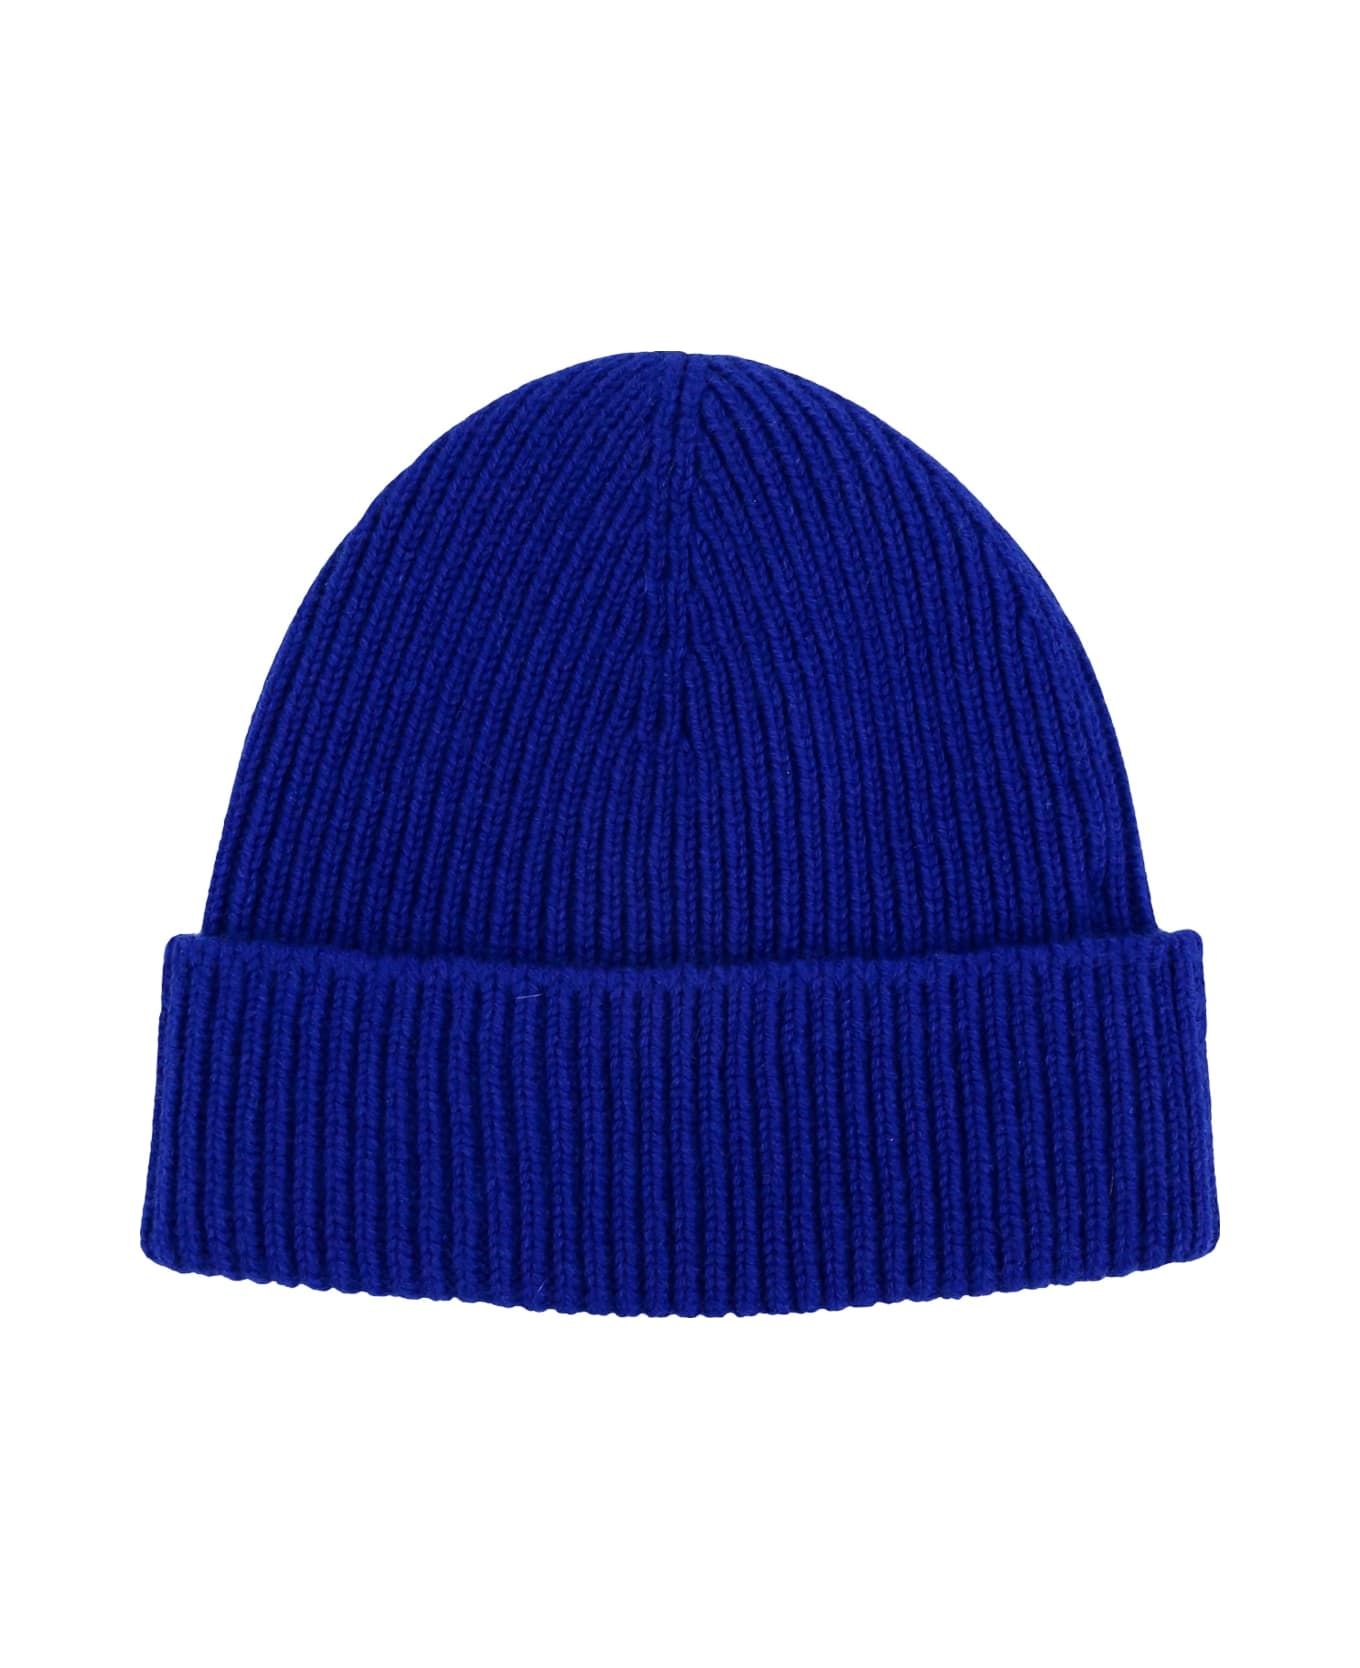 Burberry Ekd Beanie Hat - Blue 帽子